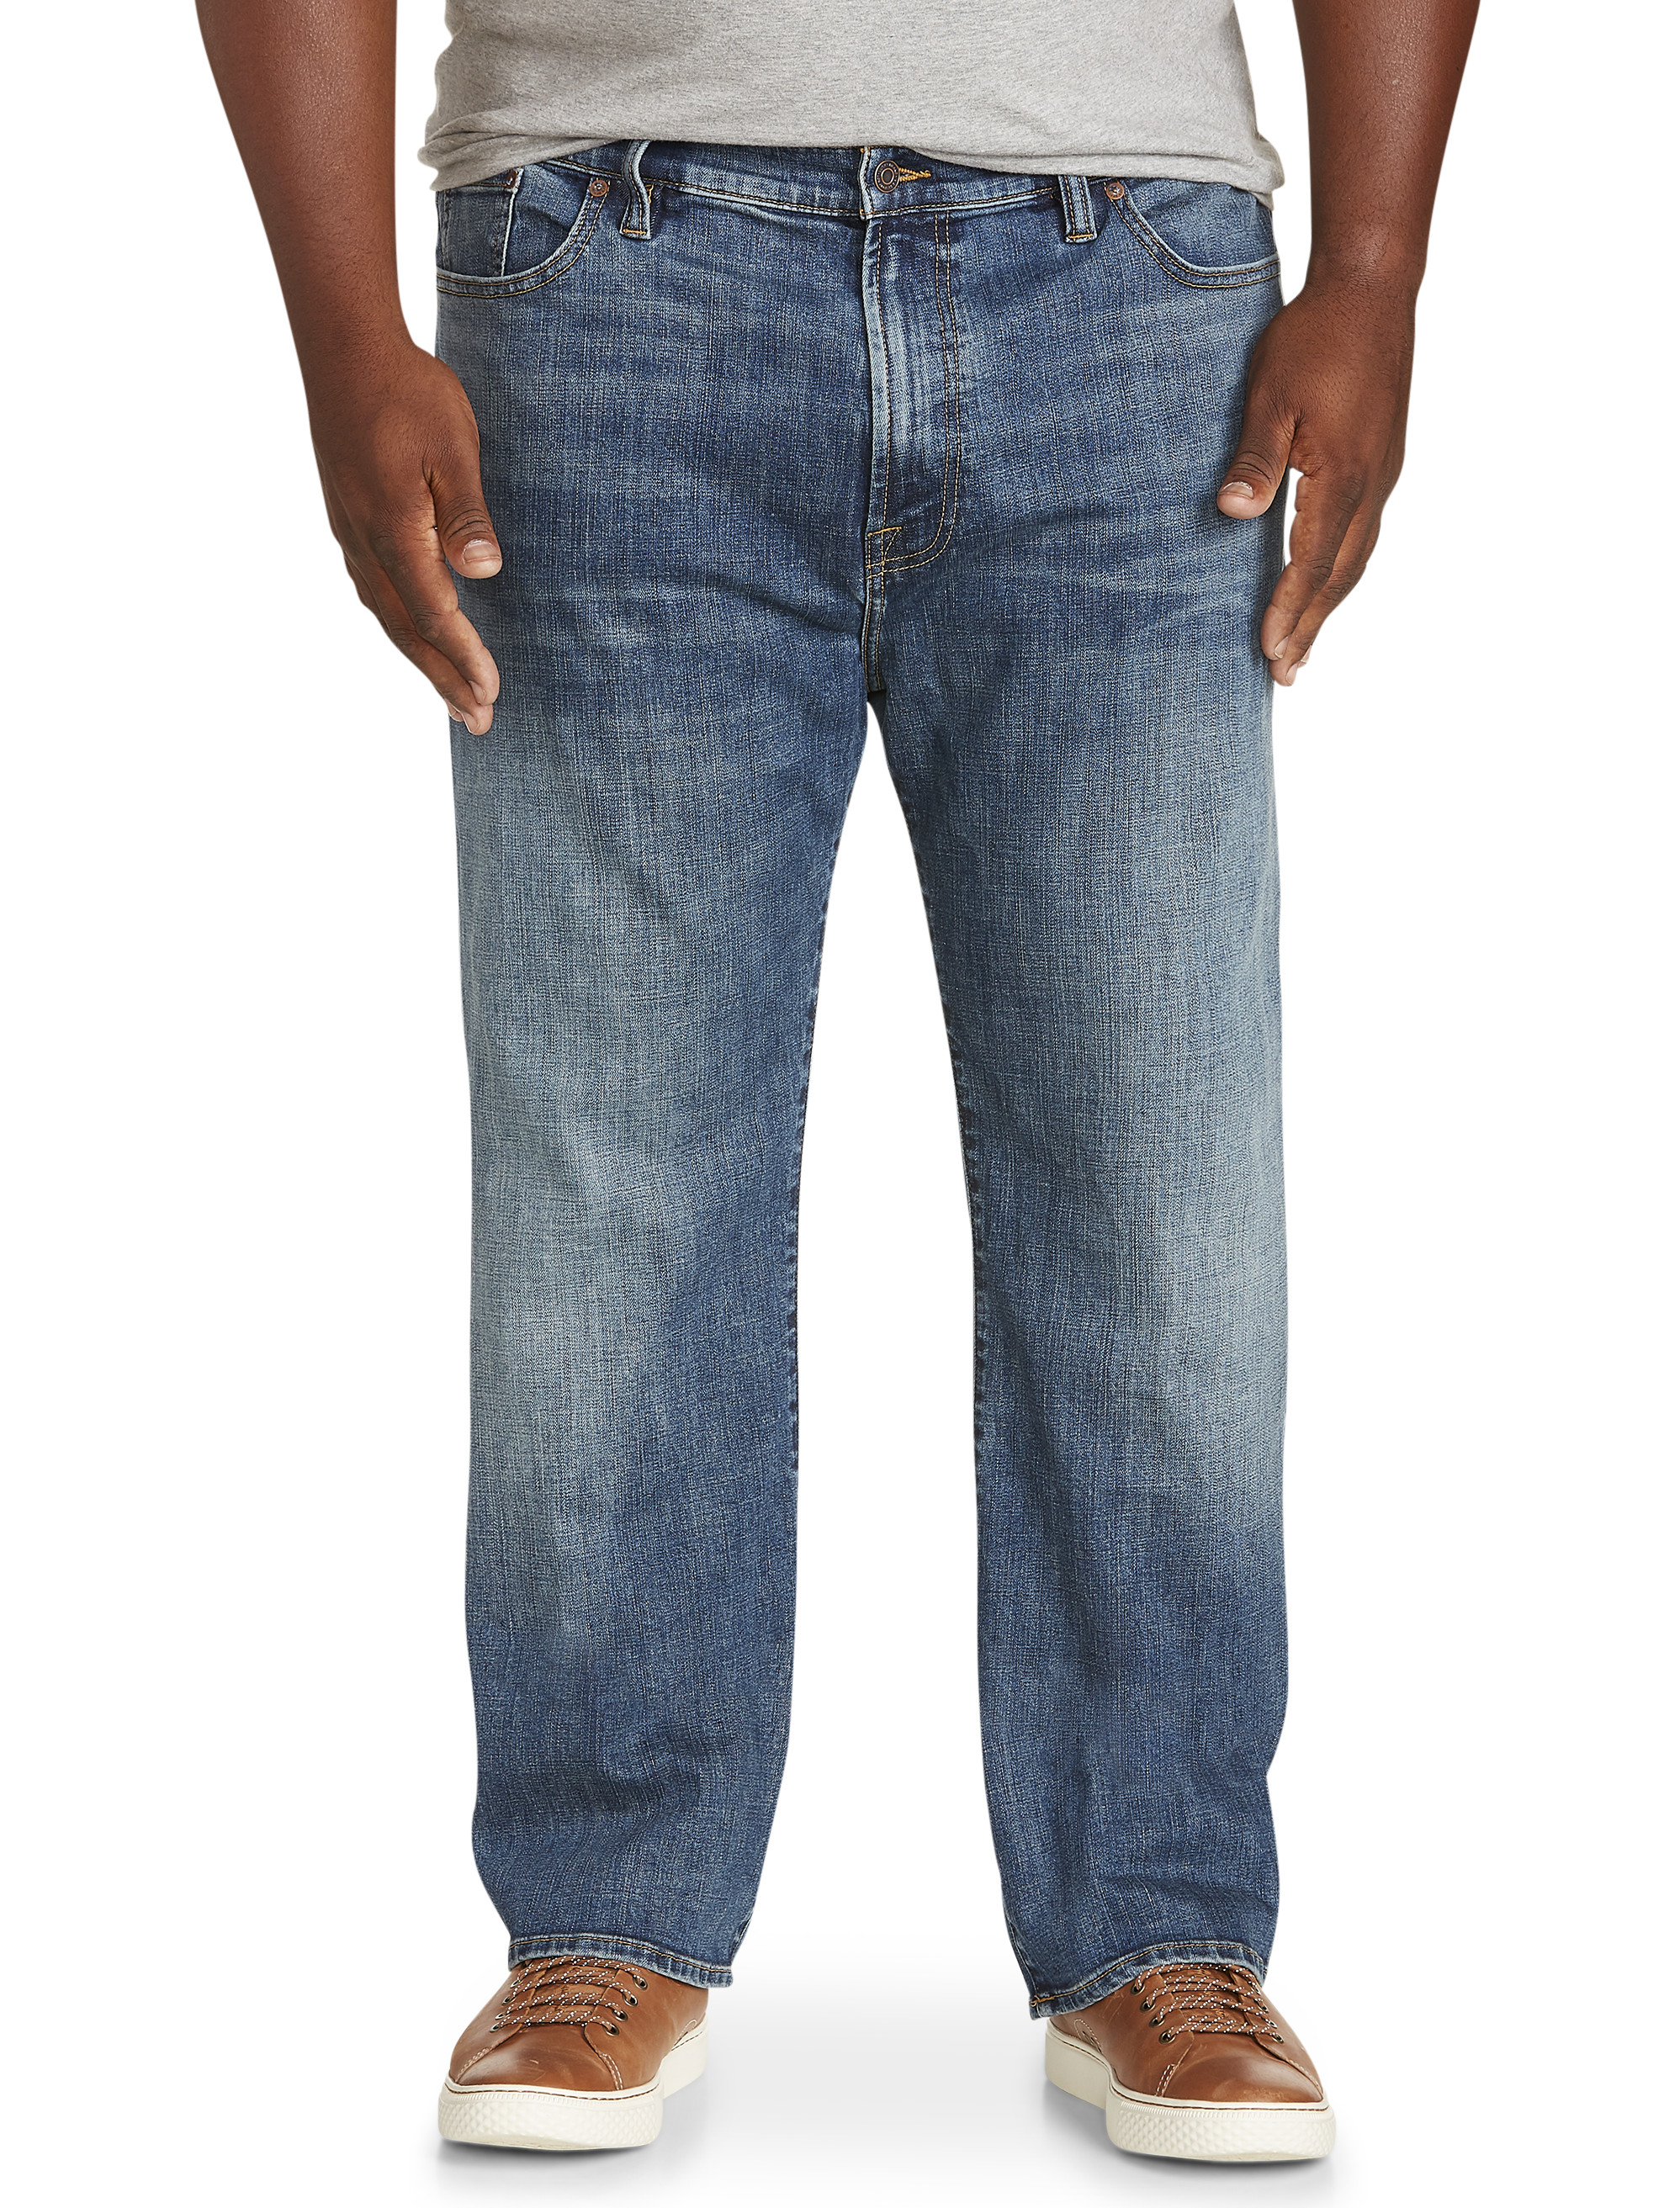 LUCKY BRAND Jeans BUCK Straight Leg Dark Blue 100% Cotton Denim Men's 38x33